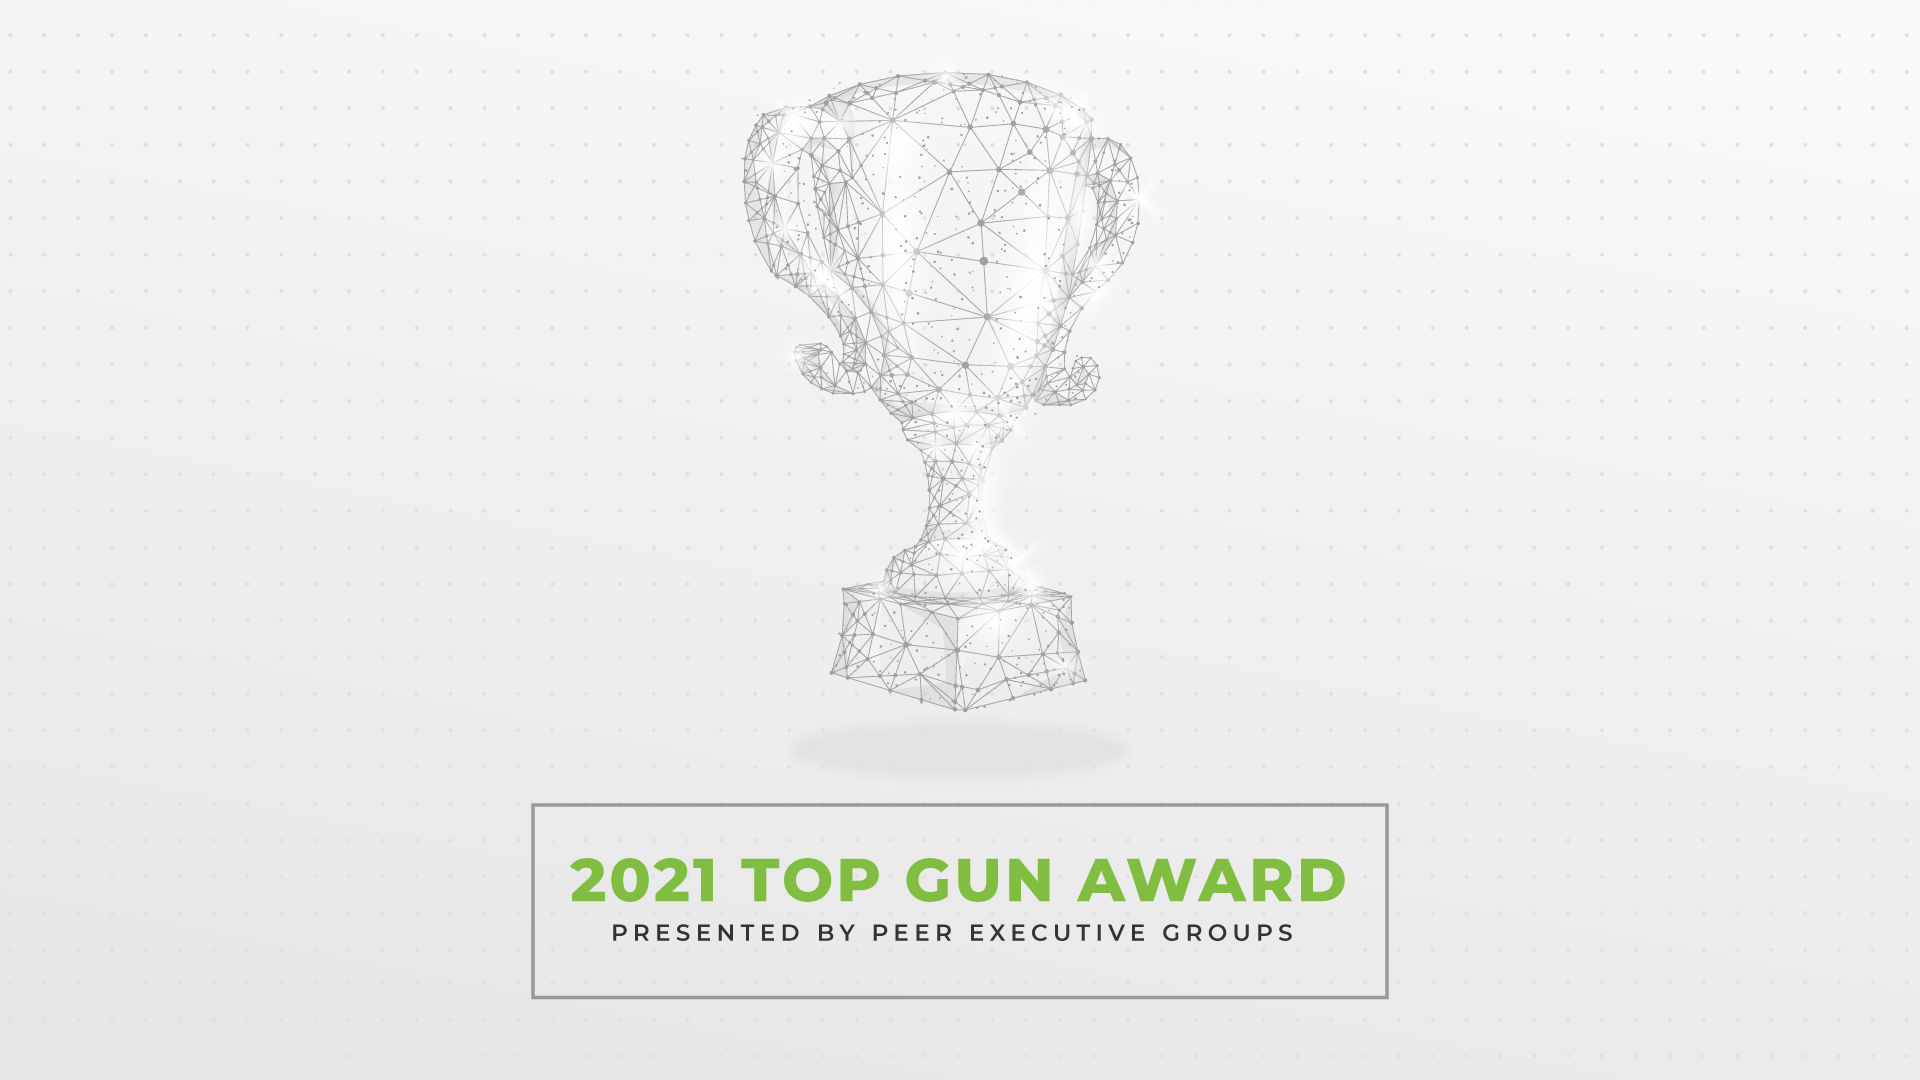 2021 Top Gun Award winners included 10 Point of Rental users.